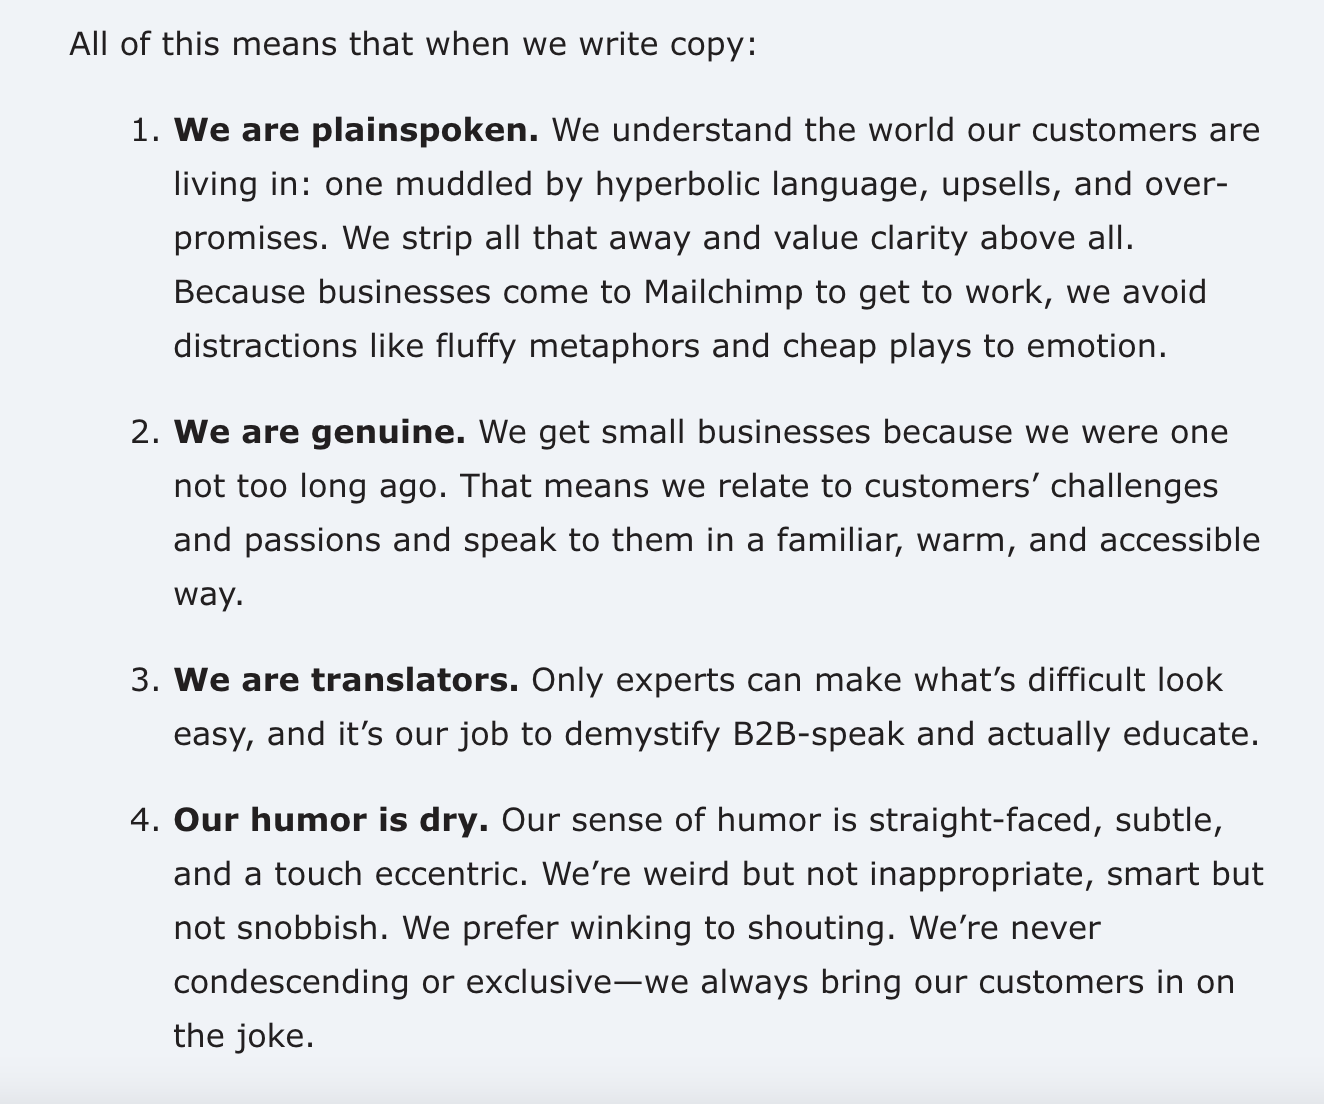 MailChimp screenshot of voice and tone guiding principles